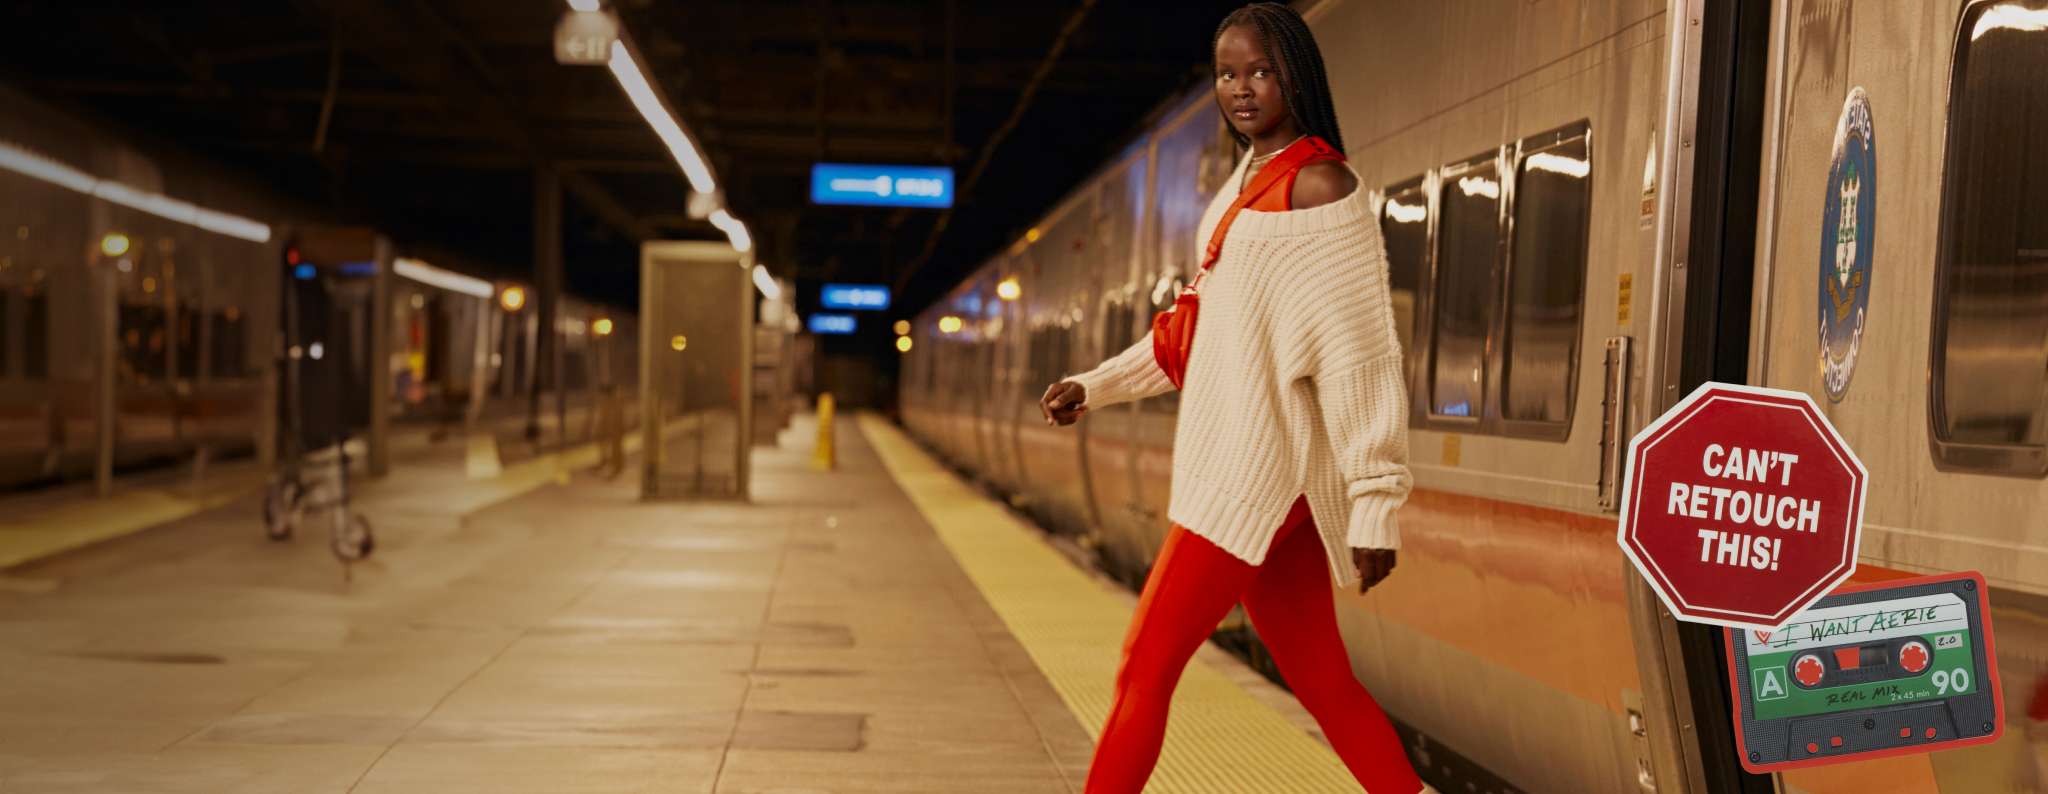 Model in offline leggings and aerie sweater in subway